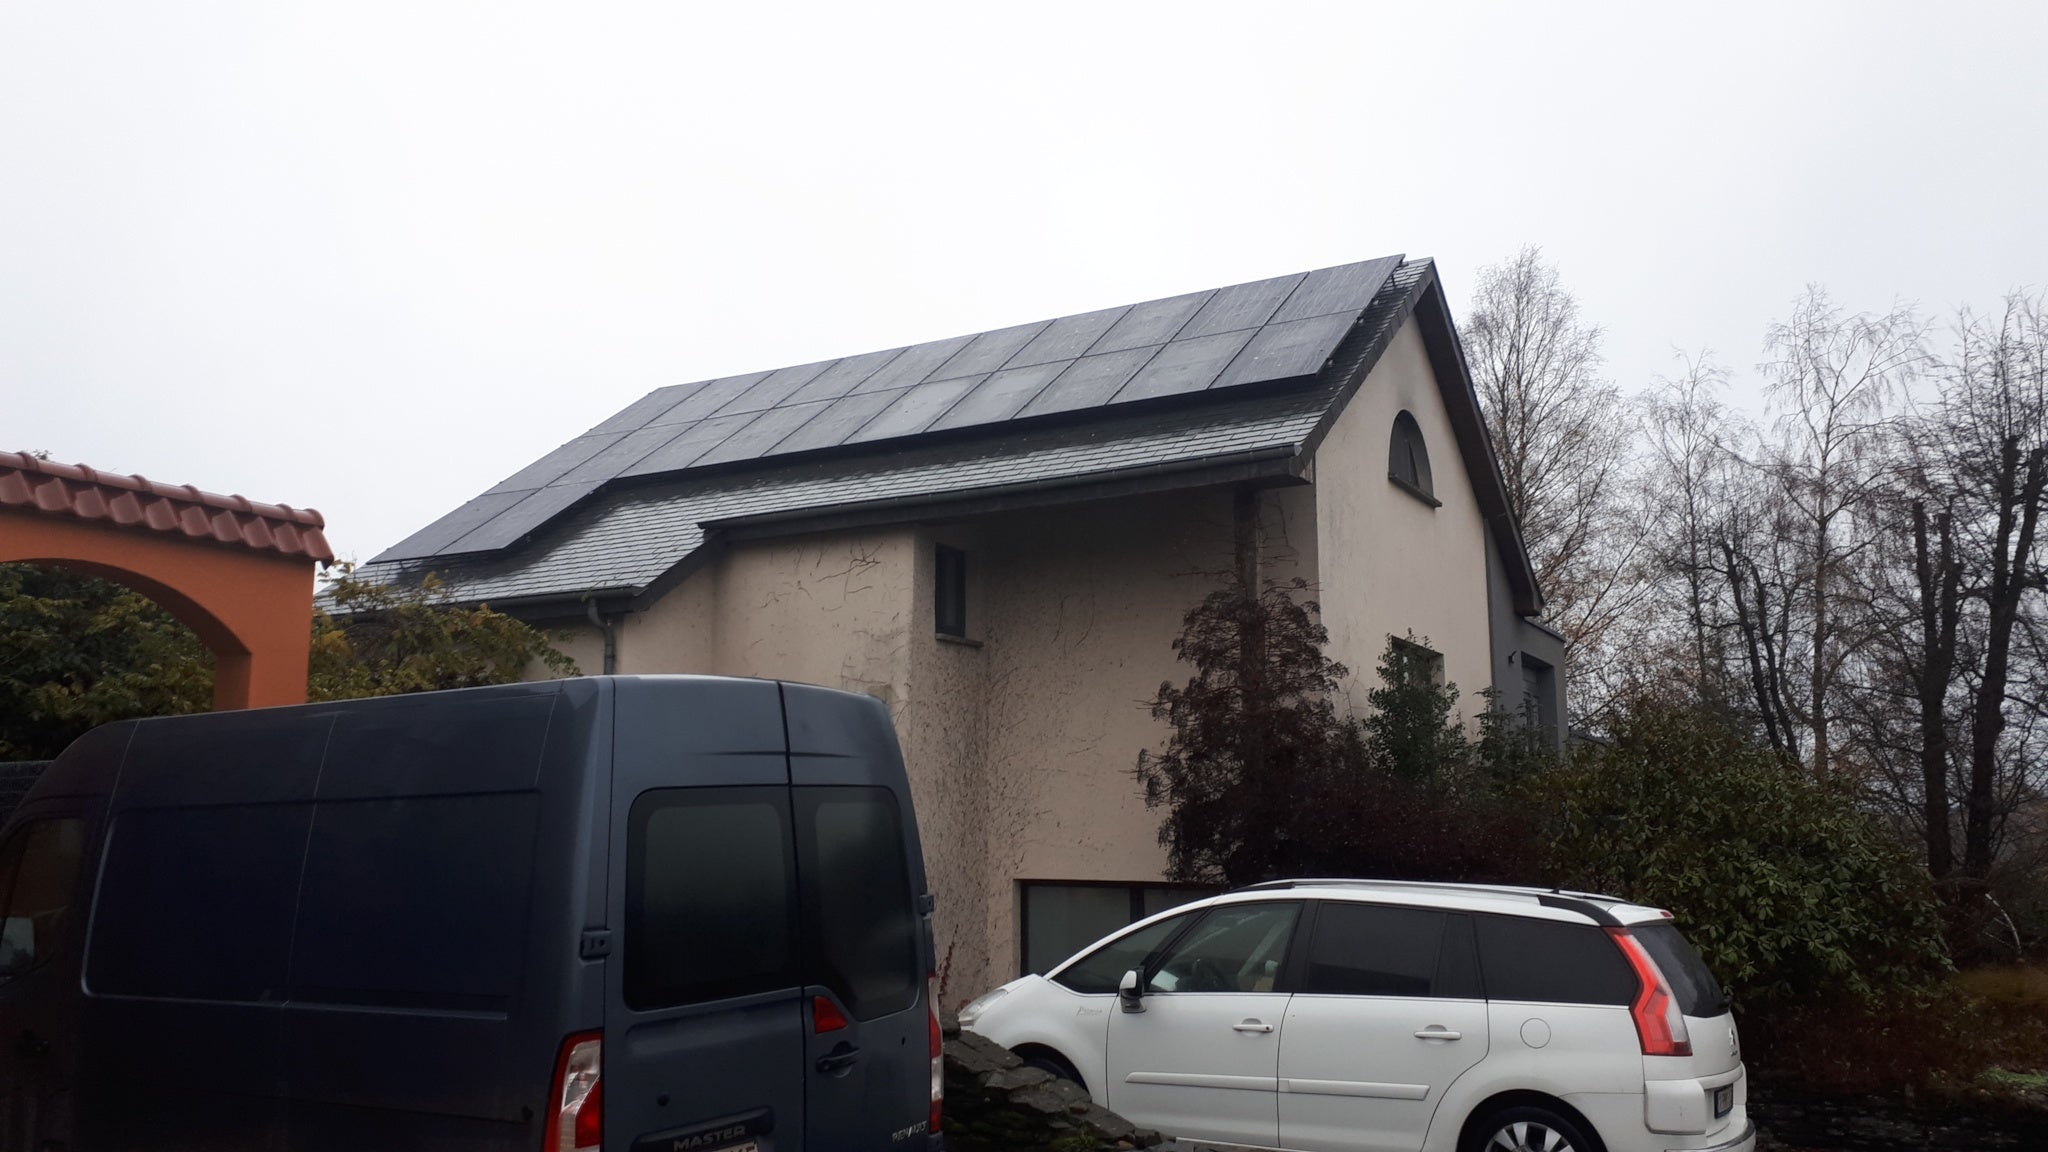 Installations solaires voltaïques depuis 2011 | prov. Luxembourg belge - MultiShop.lu